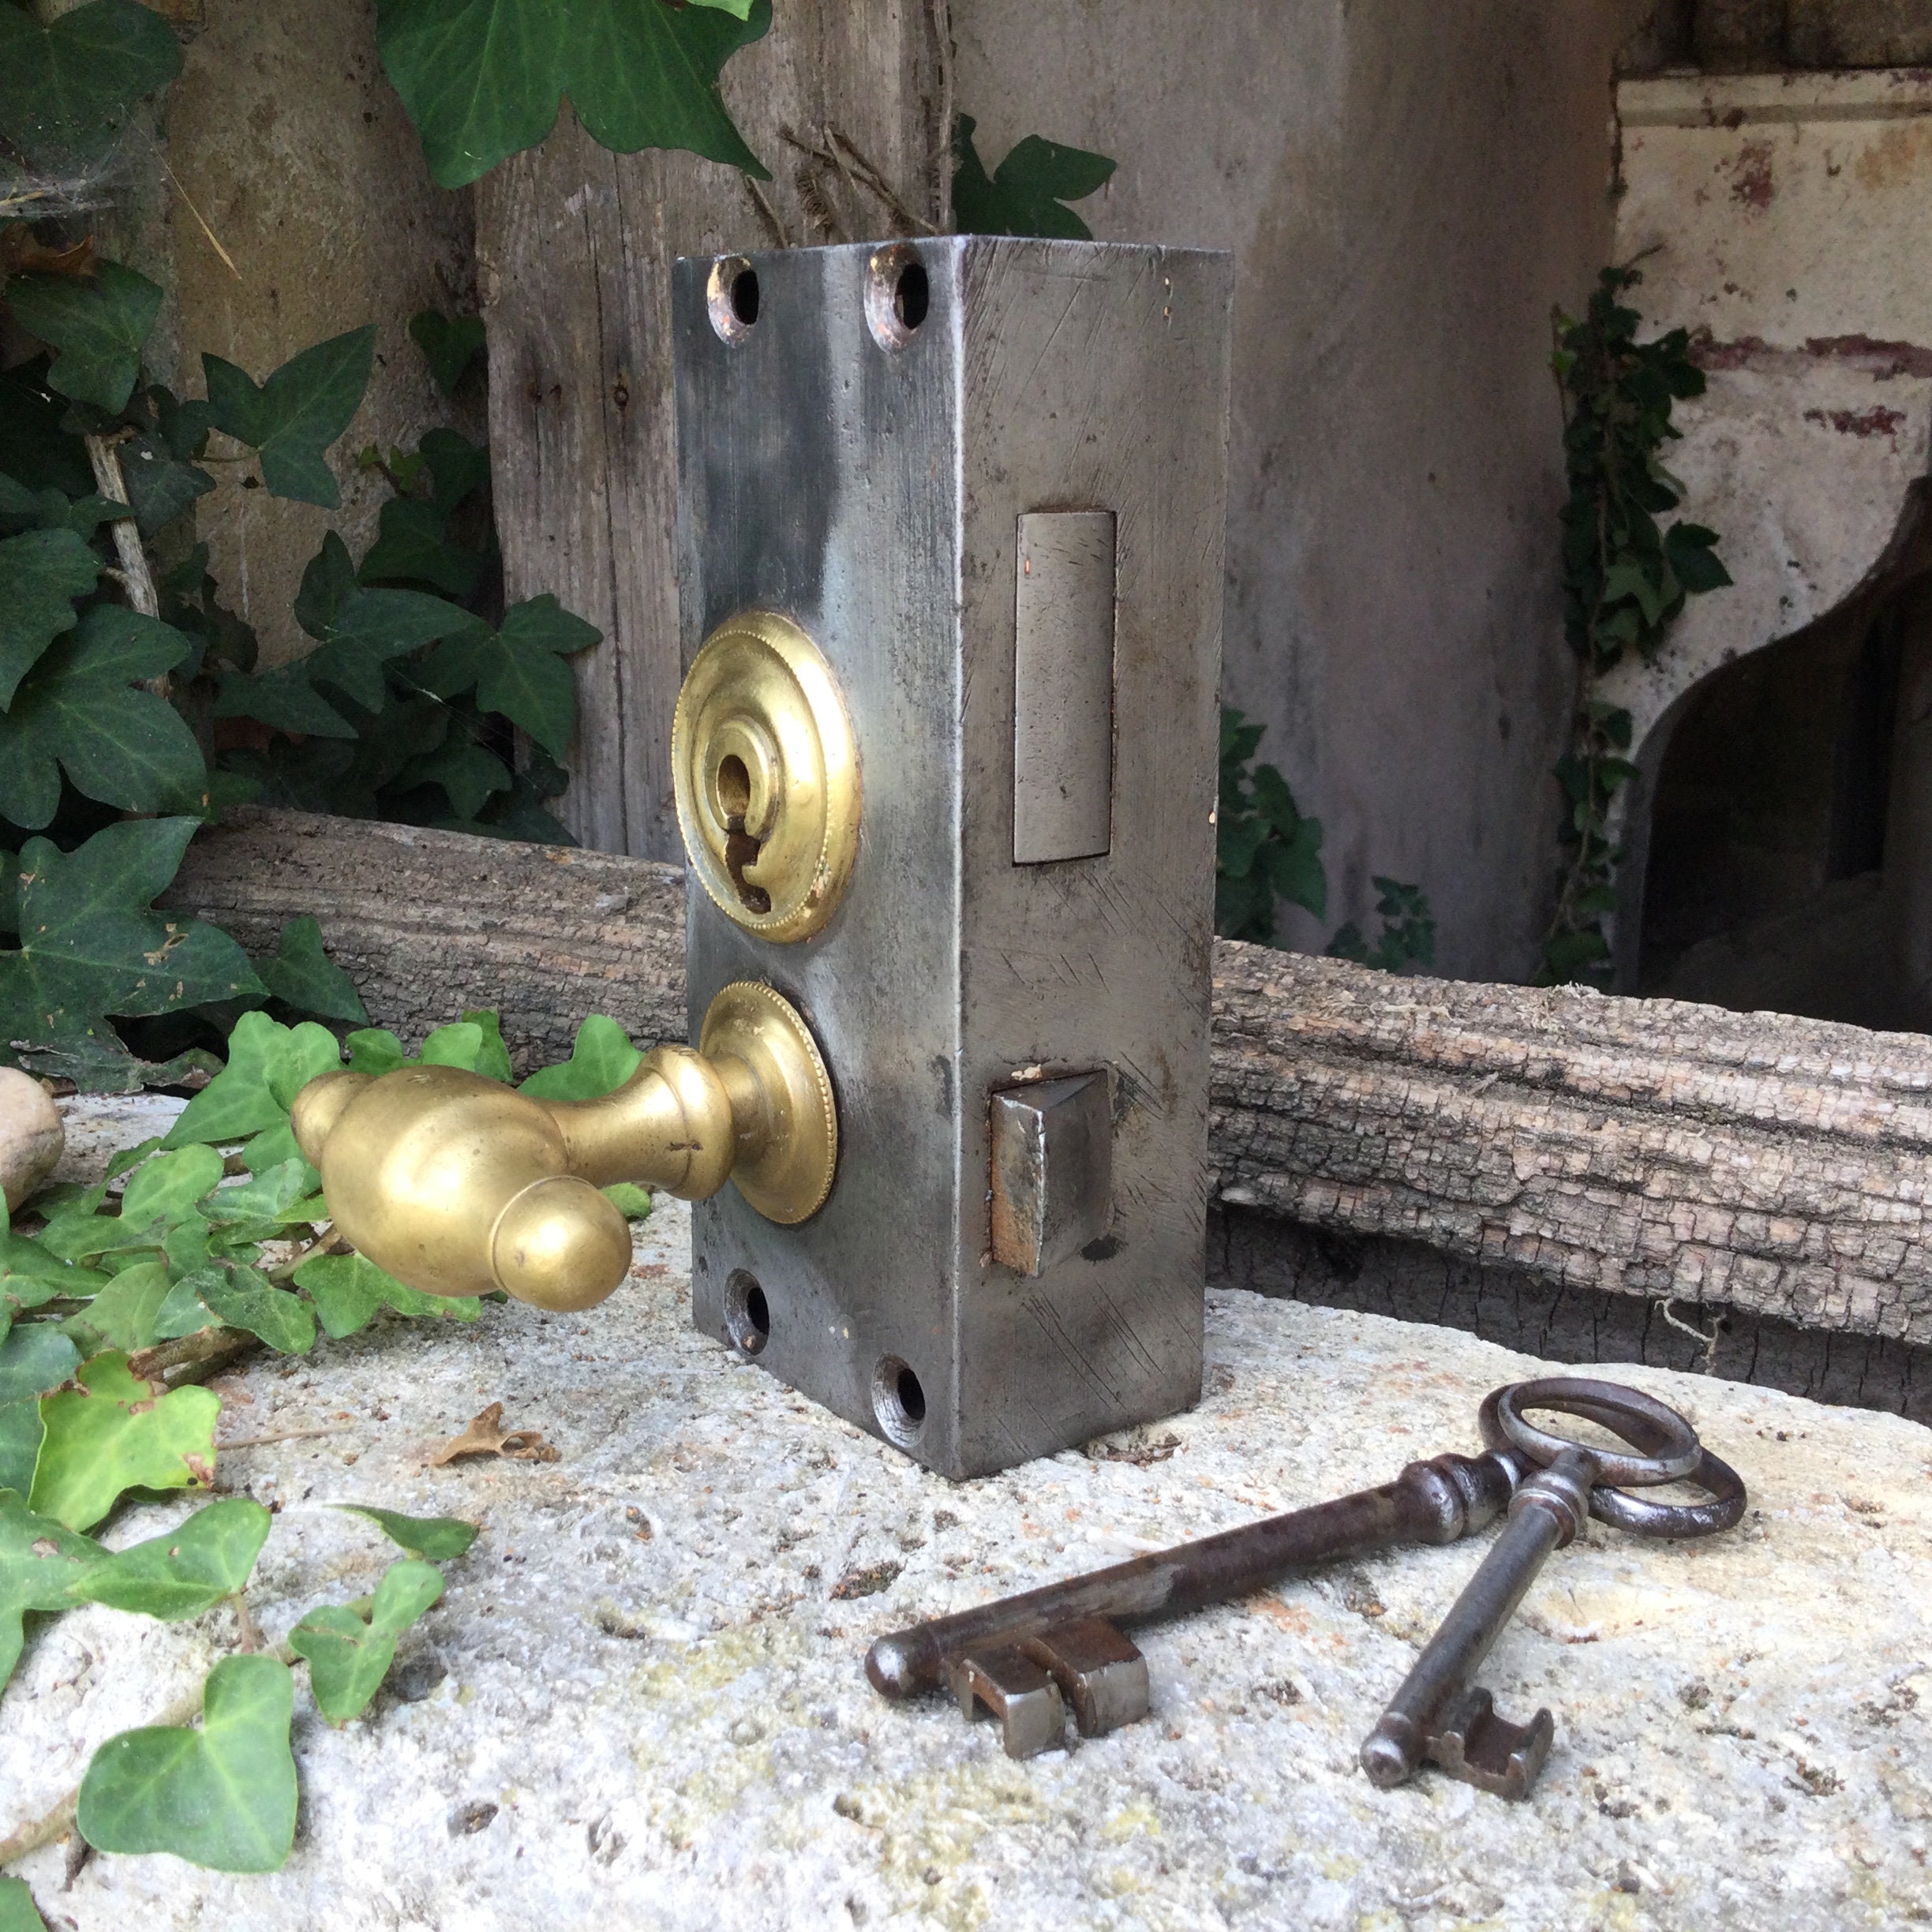 INTRUDERLOCK Conservatory Patio French Double Door Dead Lock Extra Security